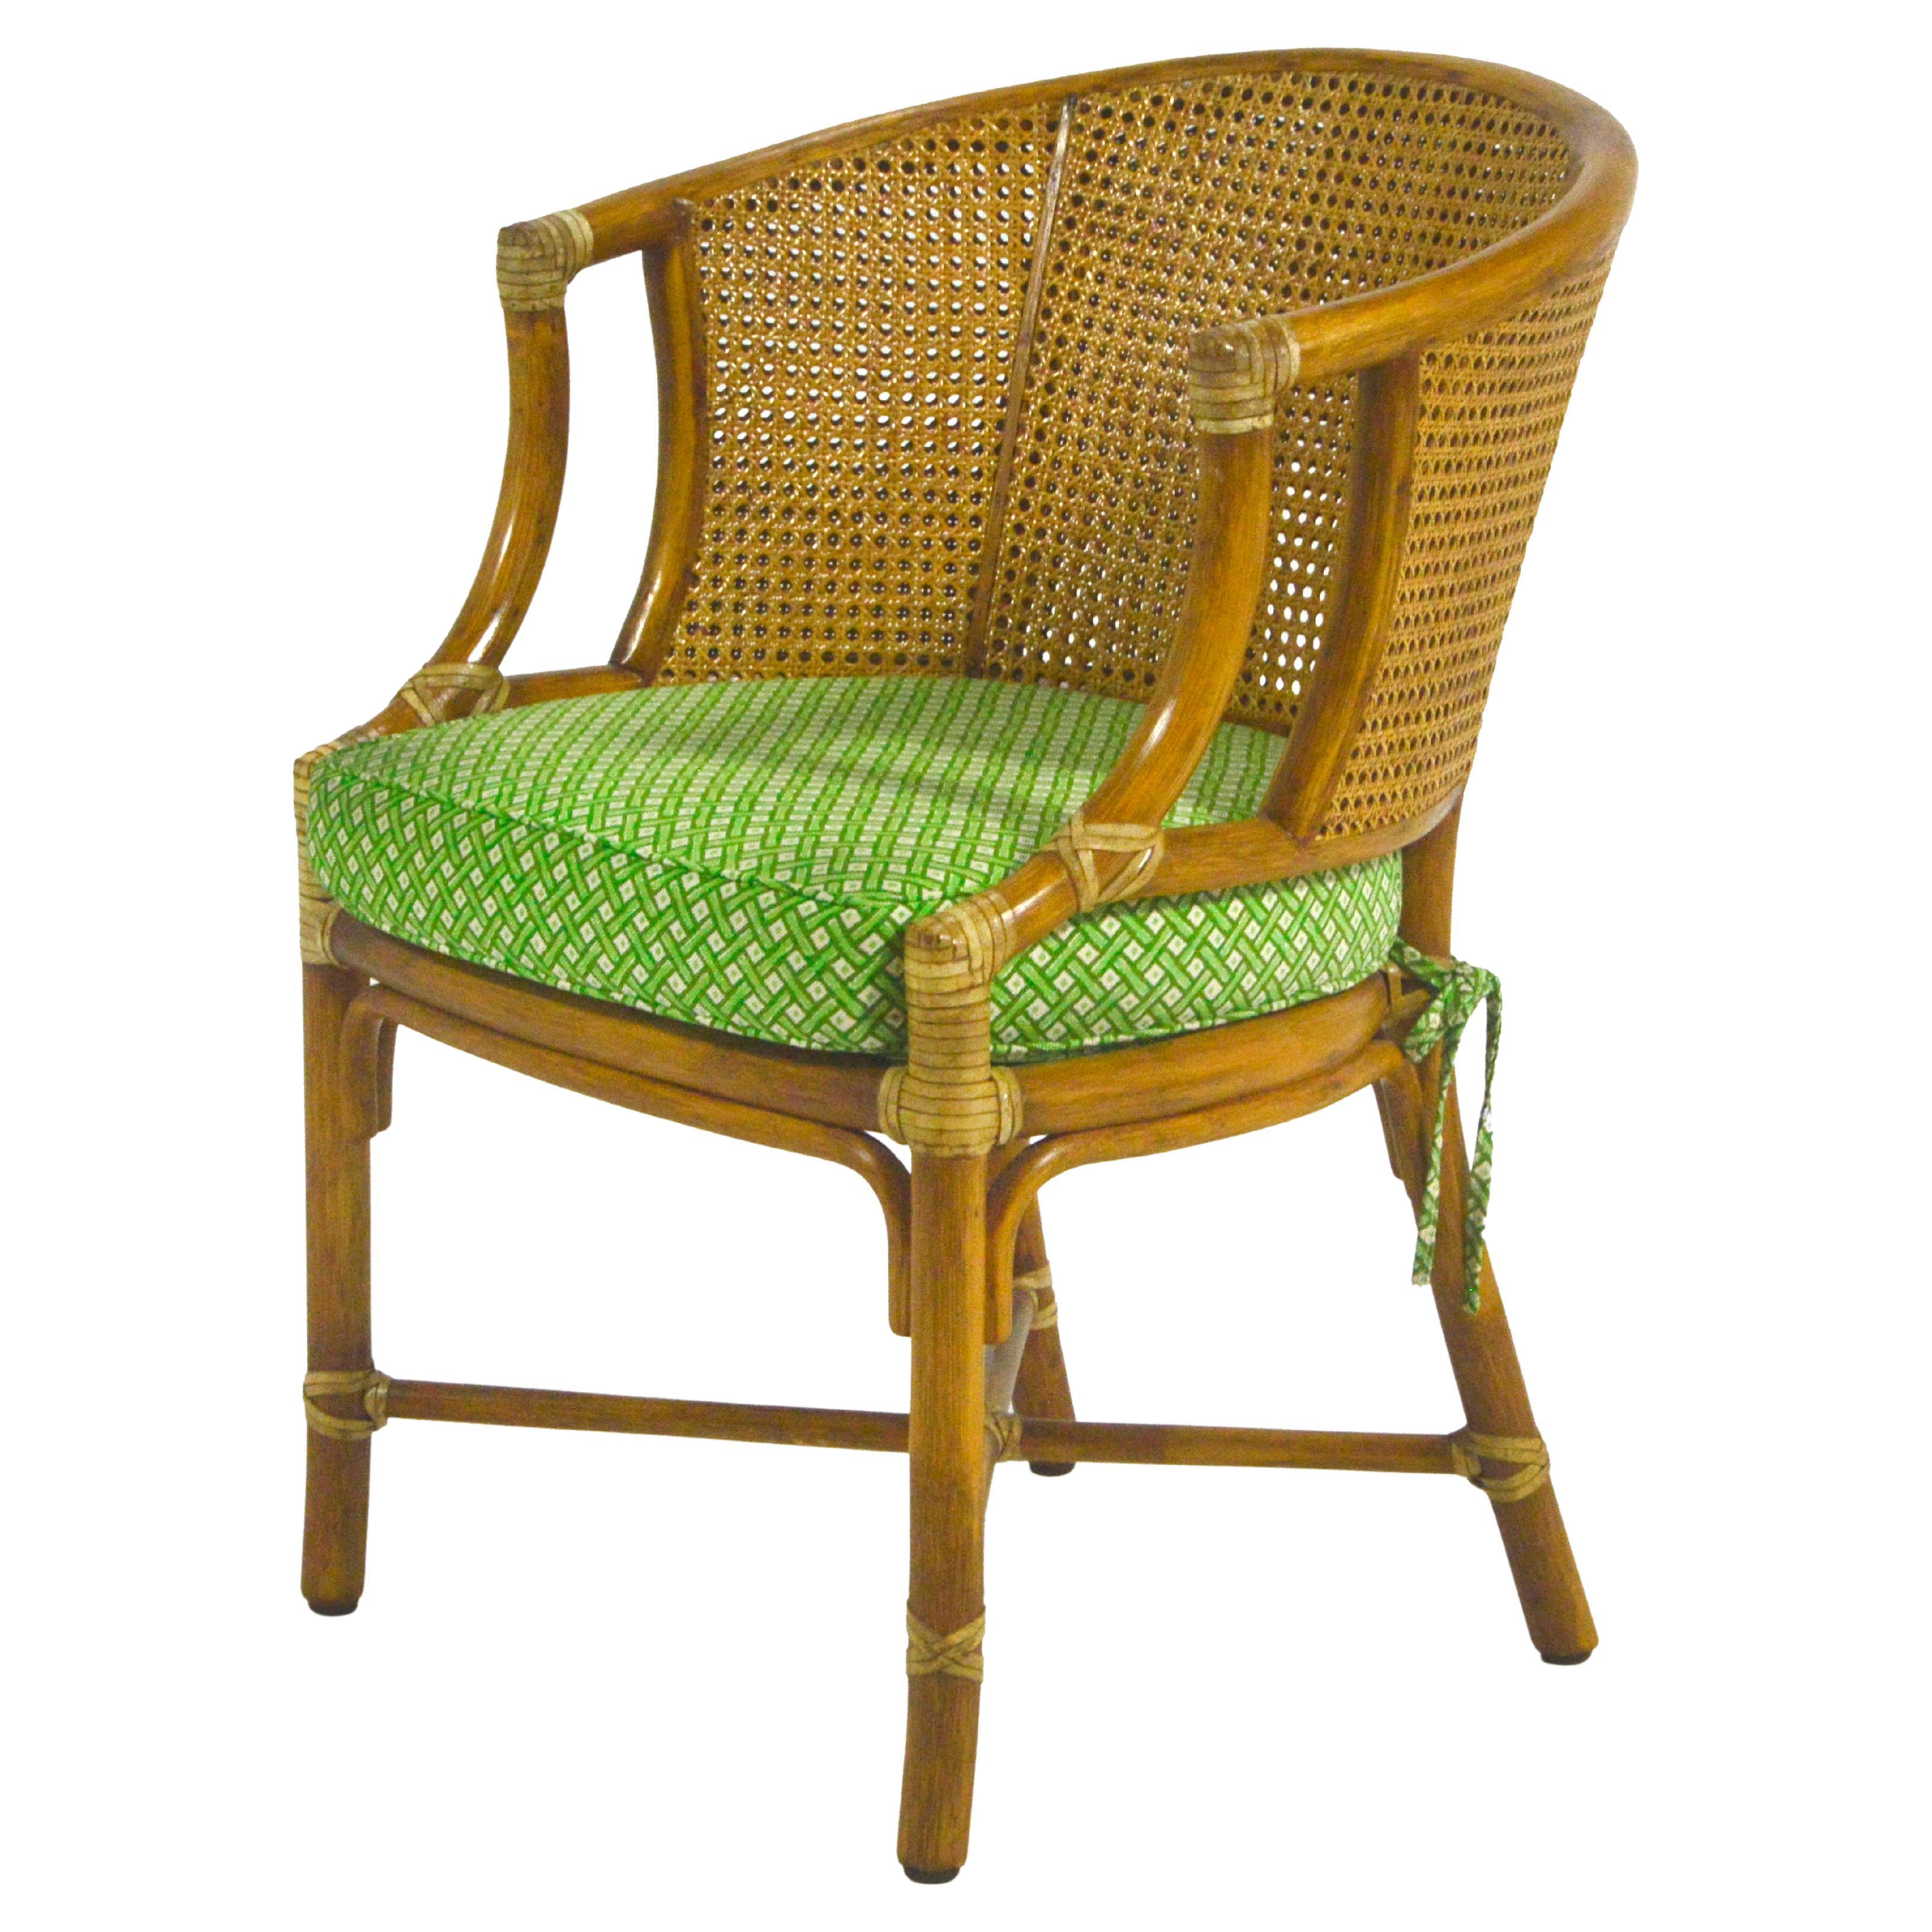 Elinor McGuire M-86 Rattan & Cane Chair